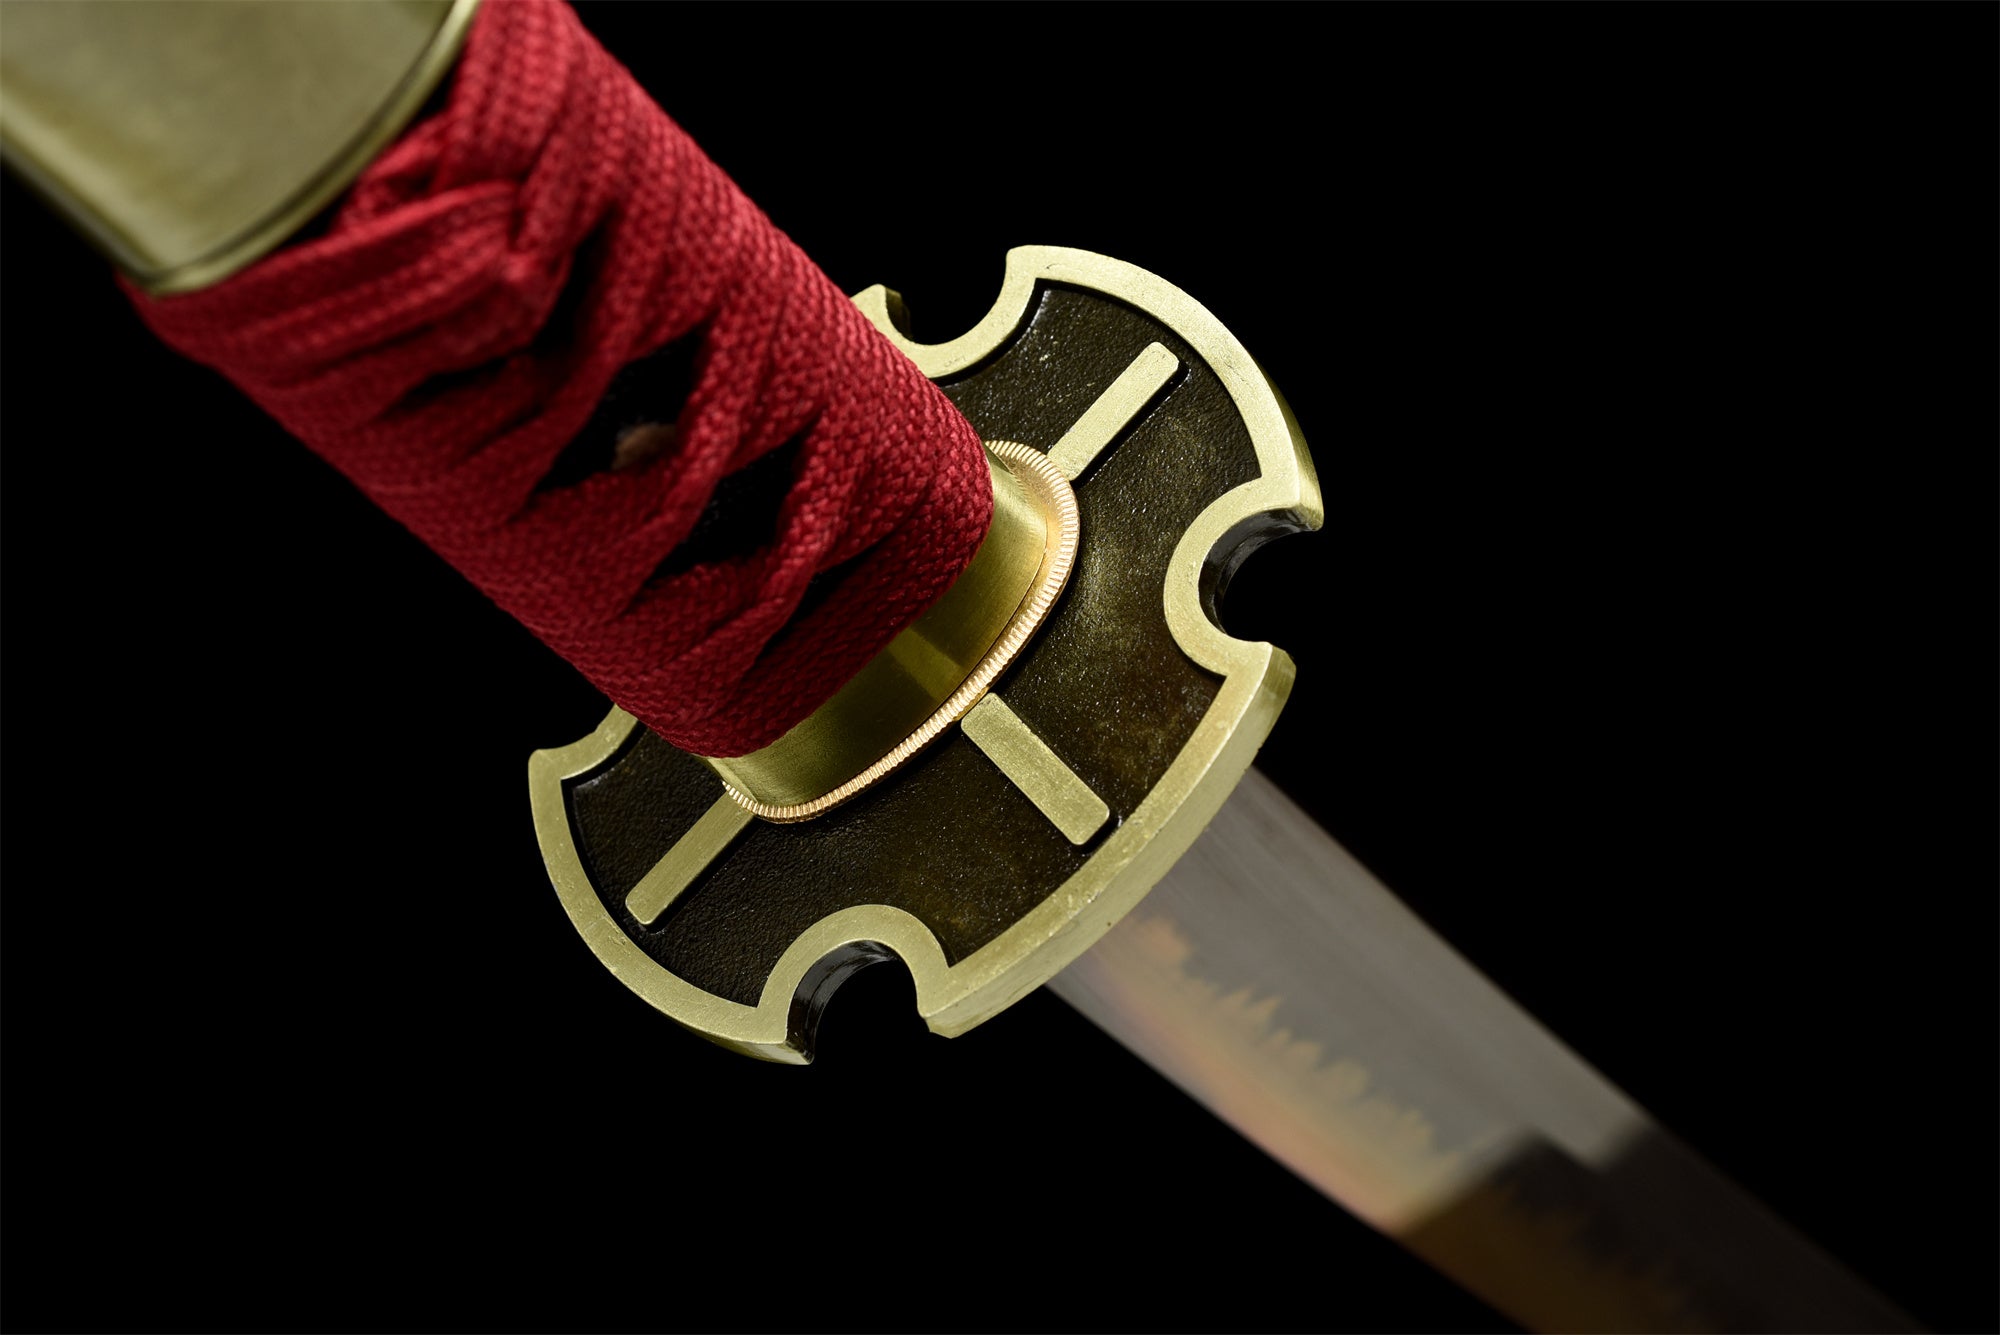  Sharp Zoro Sword Real Metal 3 Set-High Carbon Steel Handmade  Anime Sword, Samurai Katana One Piece Sword : Sports & Outdoors